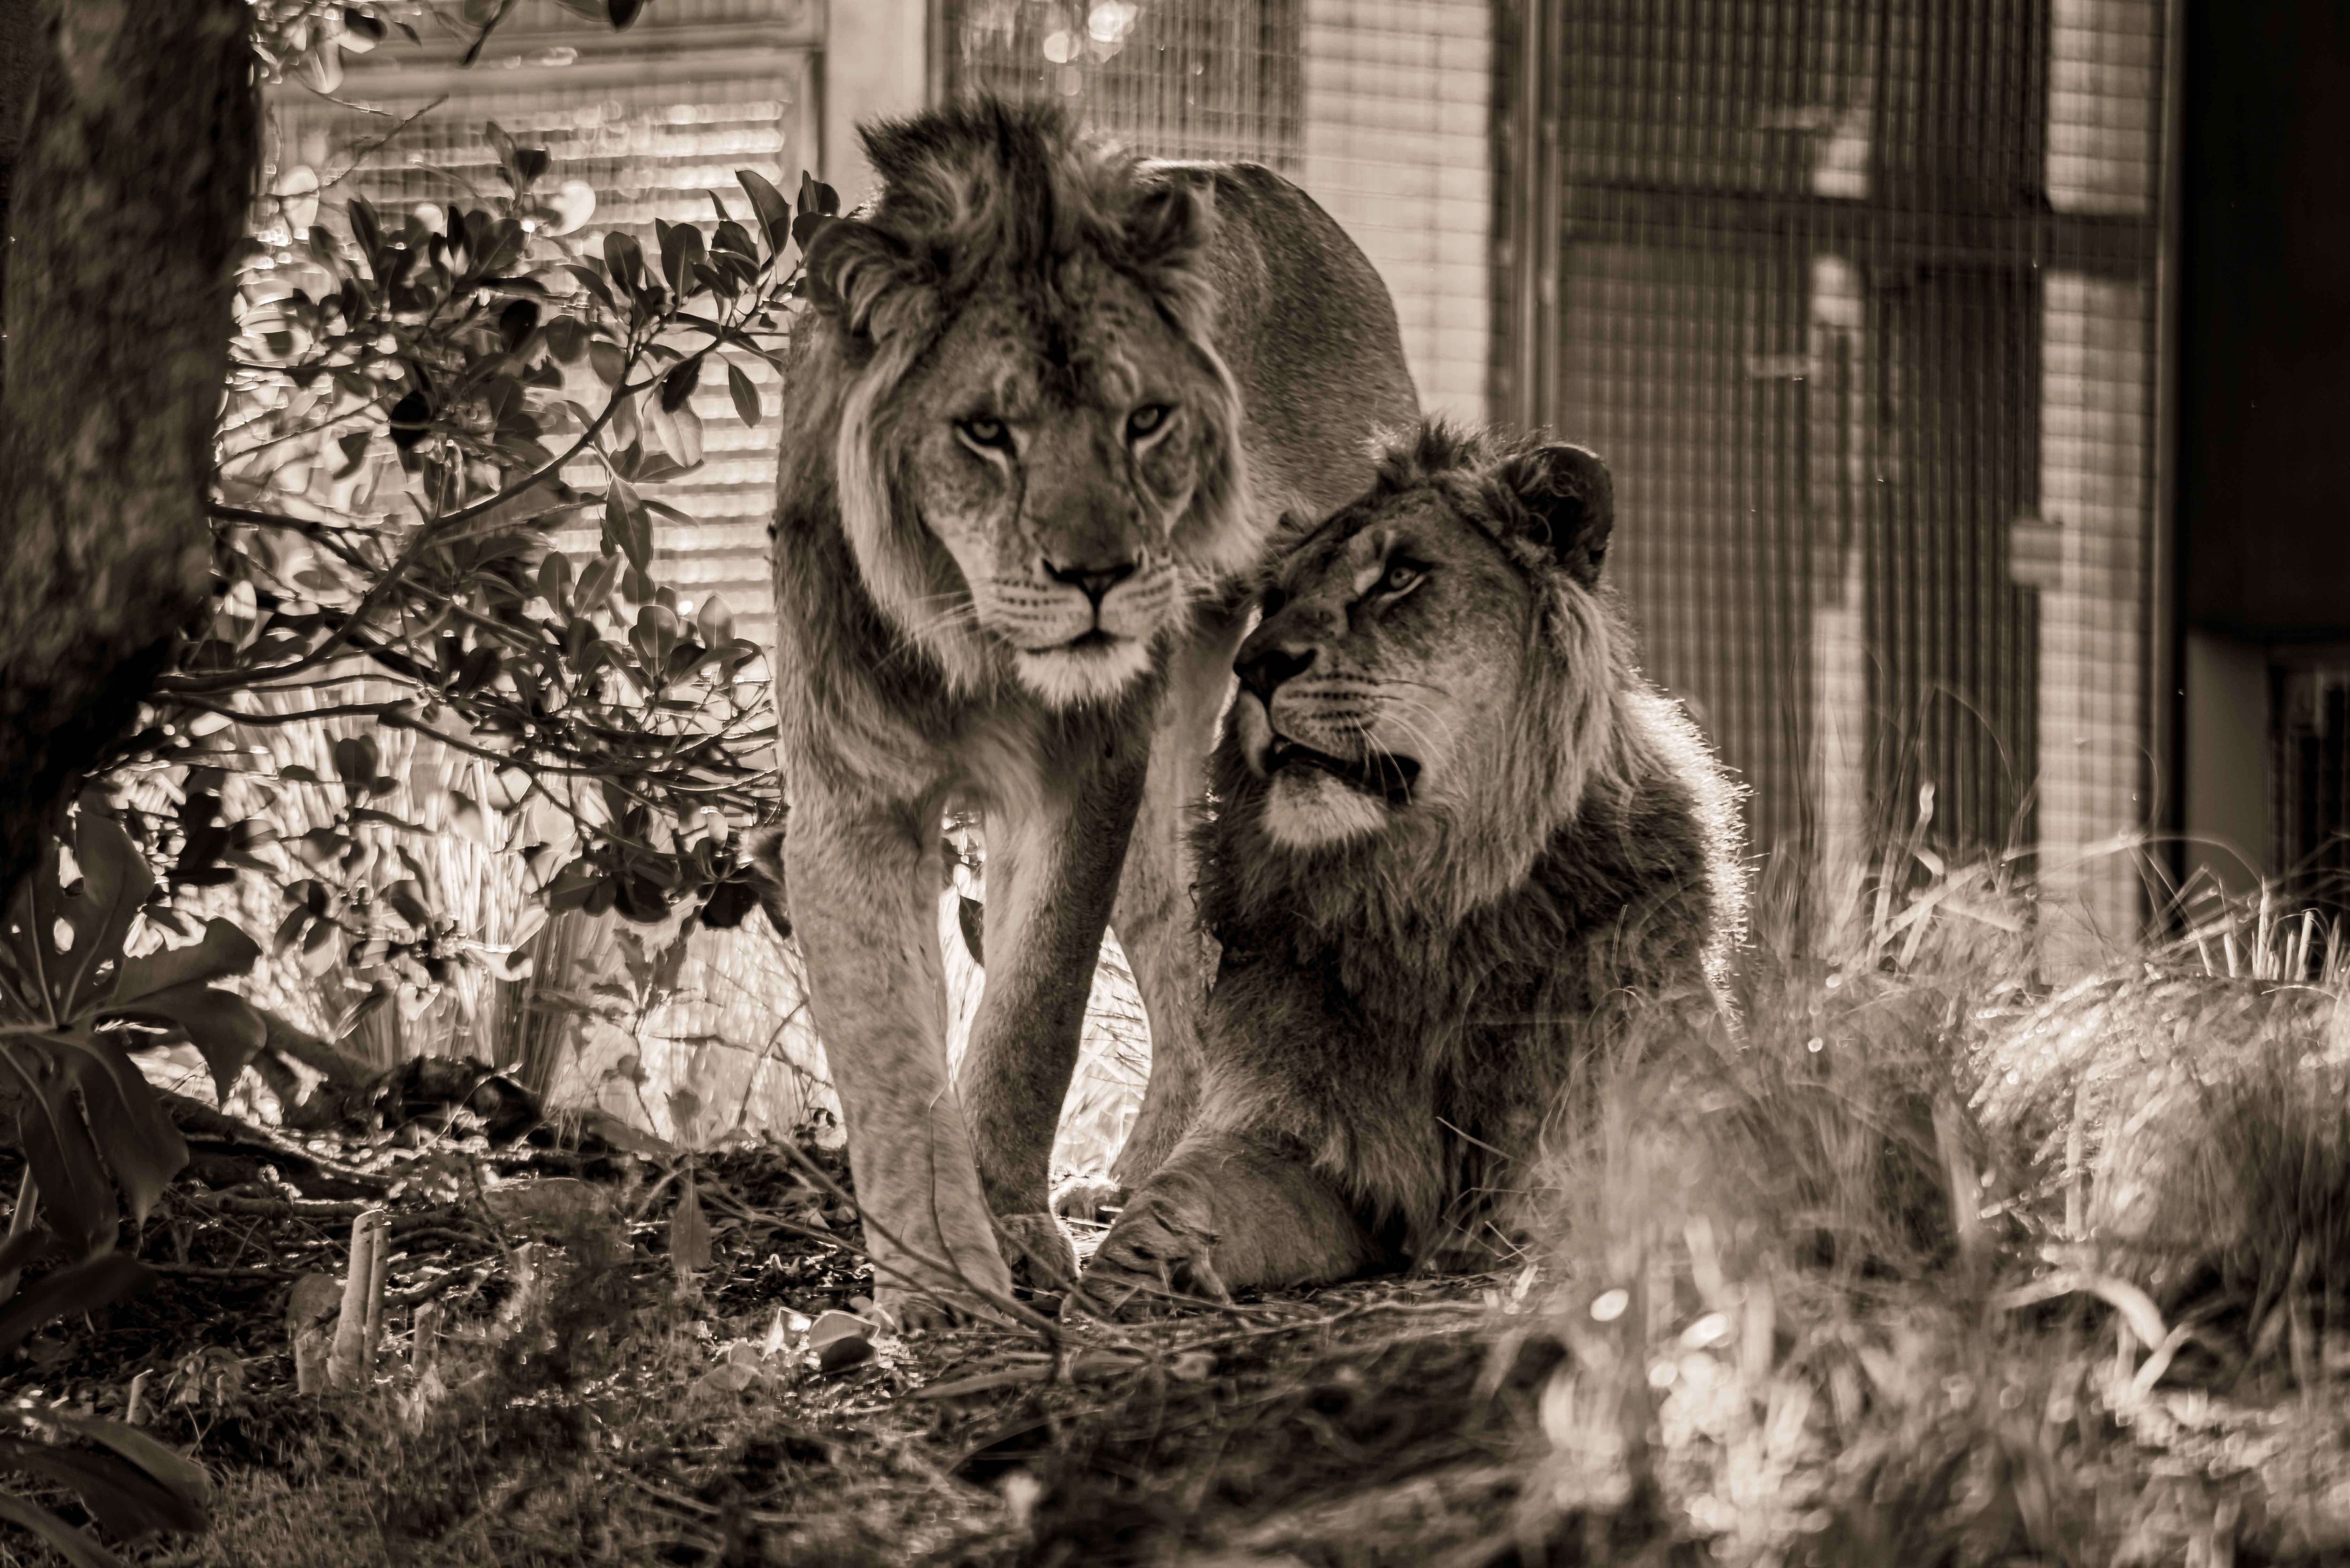 SEMD215 - DSC_7605 Sepia - 
African Savannah Lions (brothers Lwazi & Ato), Taronga Zoo,  Sydney, NSW, Australia.
1st July 2020 - 2.29pm
Camera - Nikon D800 
F5.6 - ISO 200 - 1/80 second - Focal Length 300mm : Wildlife - Sepia : Stephen E-Moran - Fine Art Photography